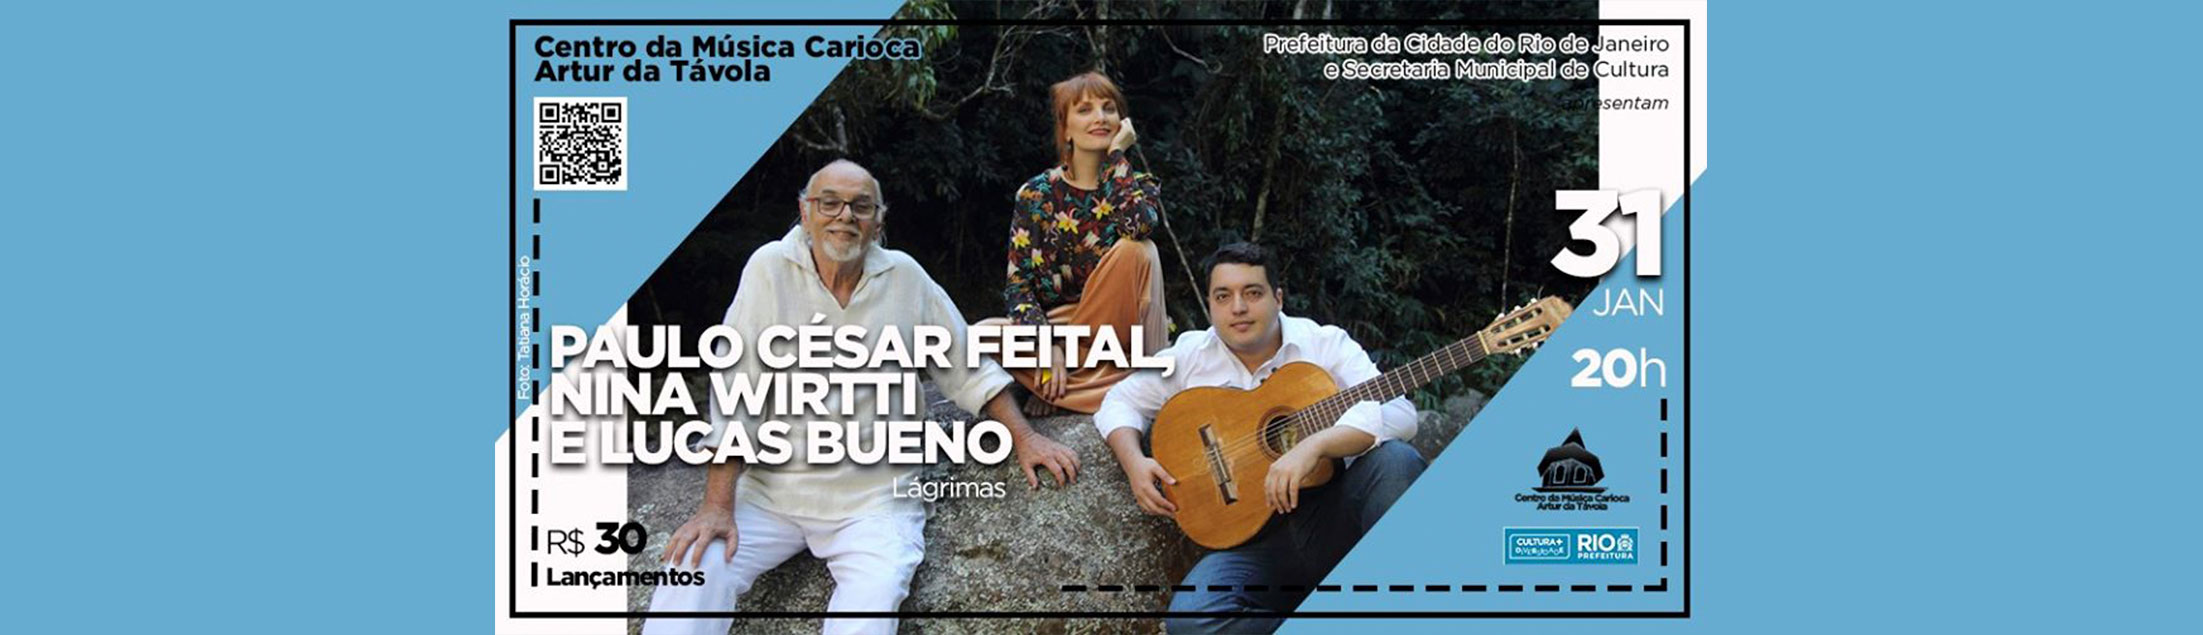 Centro da Música apresenta Paulo César Feital, Lucas Bueno e Nina Wirtti no show 'Lágrimas'